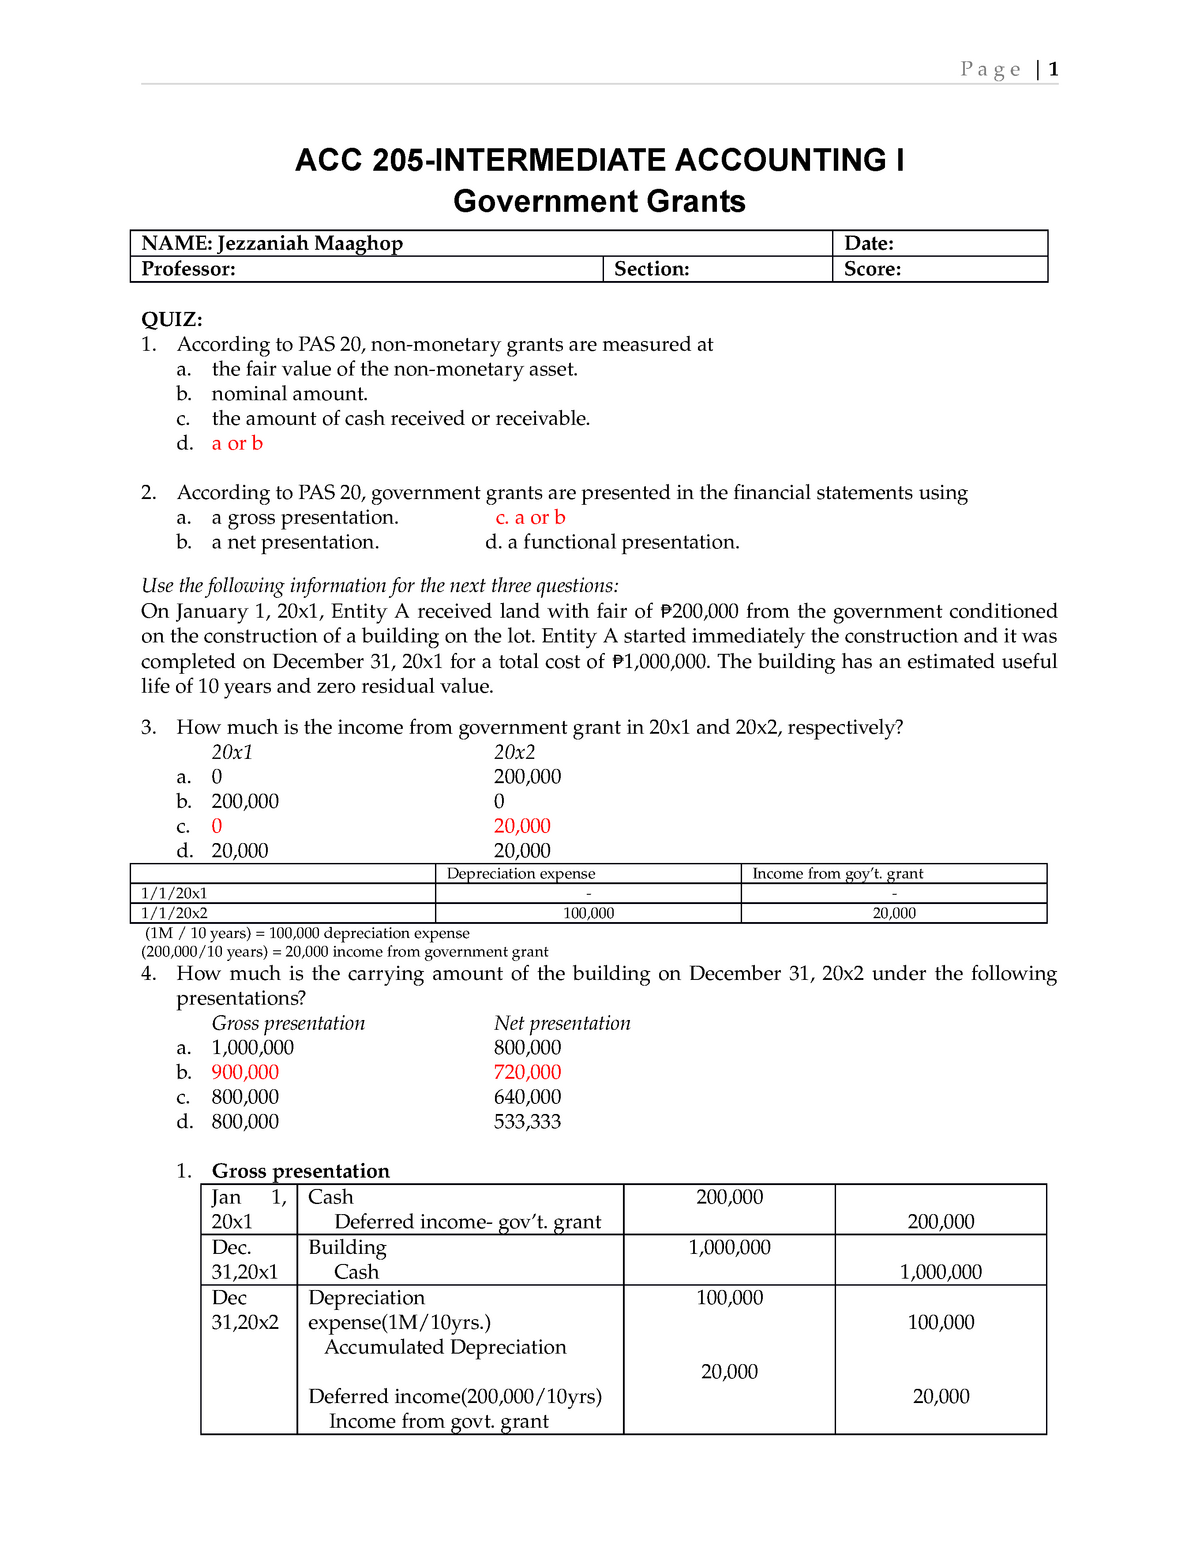 quiz-govt-grants-intermediate-accounting-acc-205-intermediate